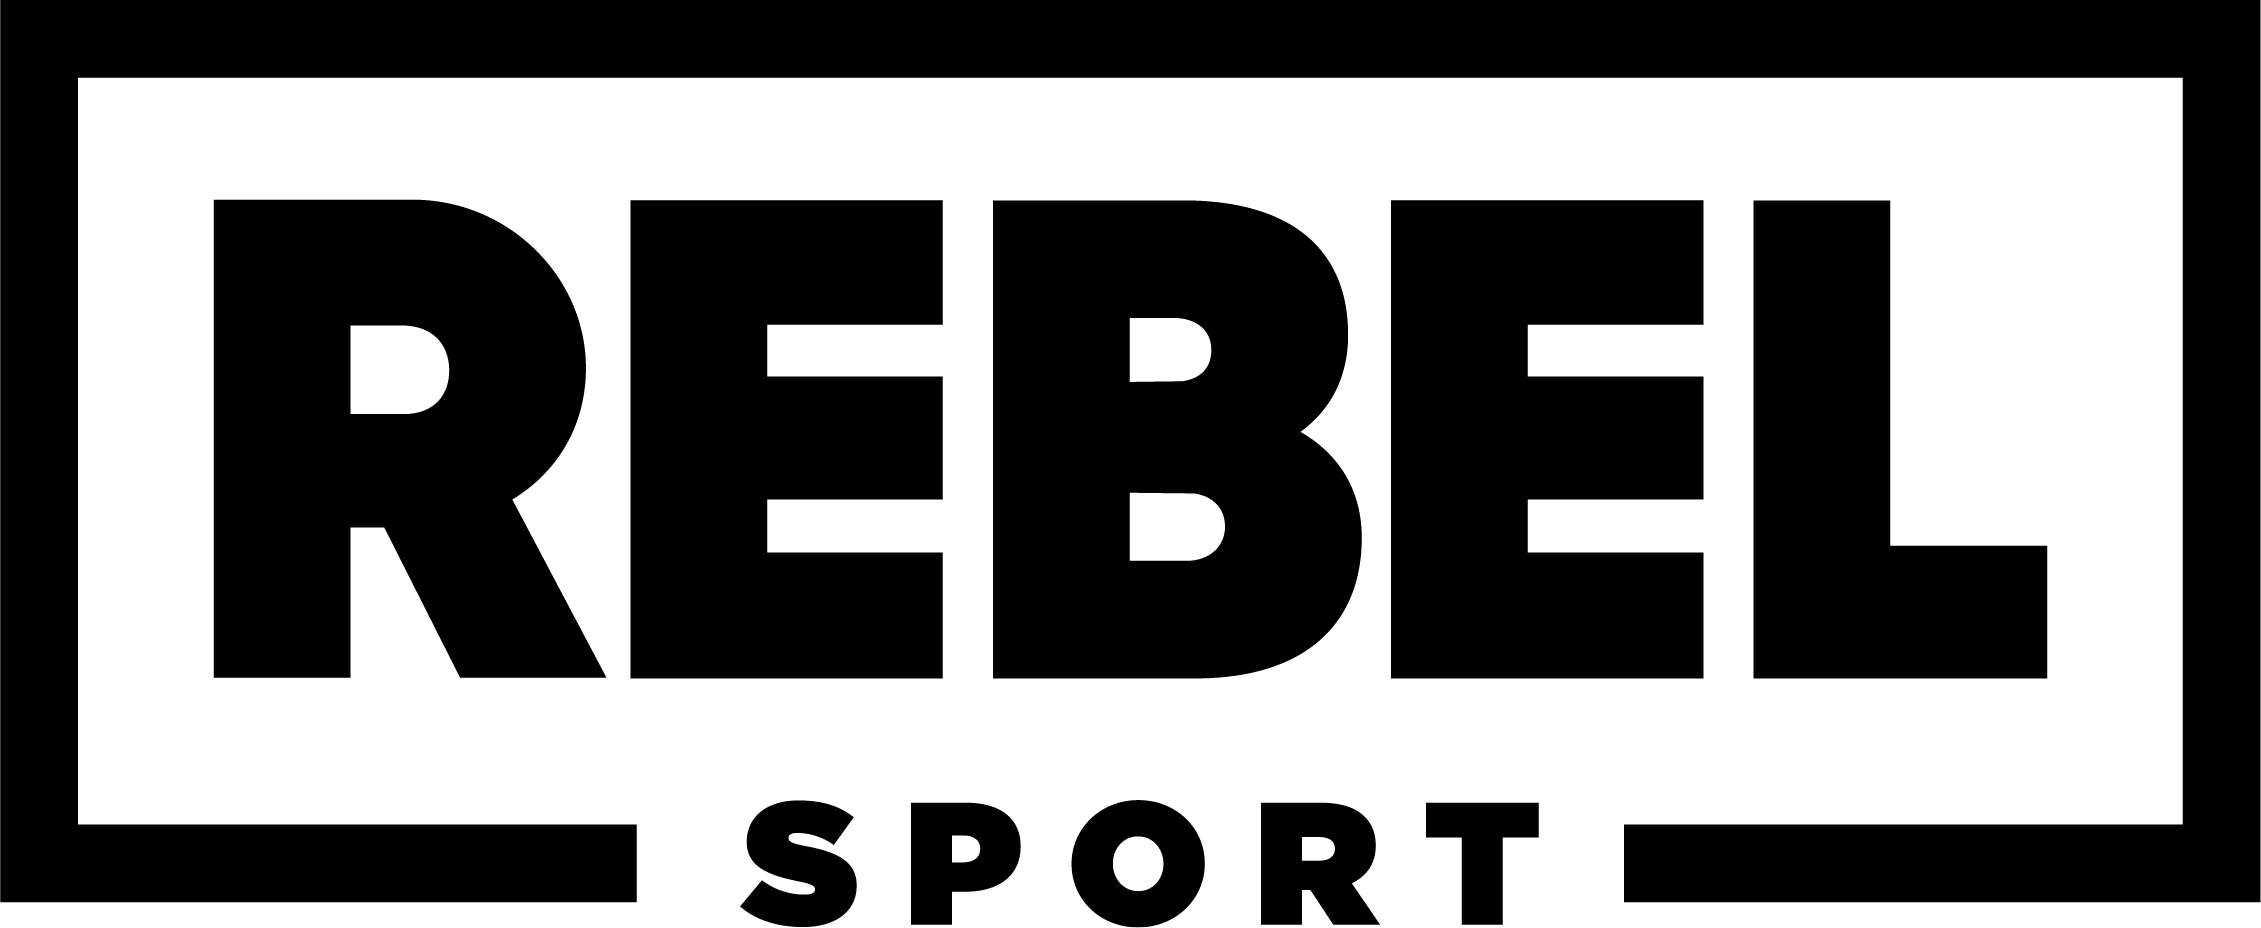 Sports Gear & Equipment - Shop Online with Rebel Sport, Rebel Sport